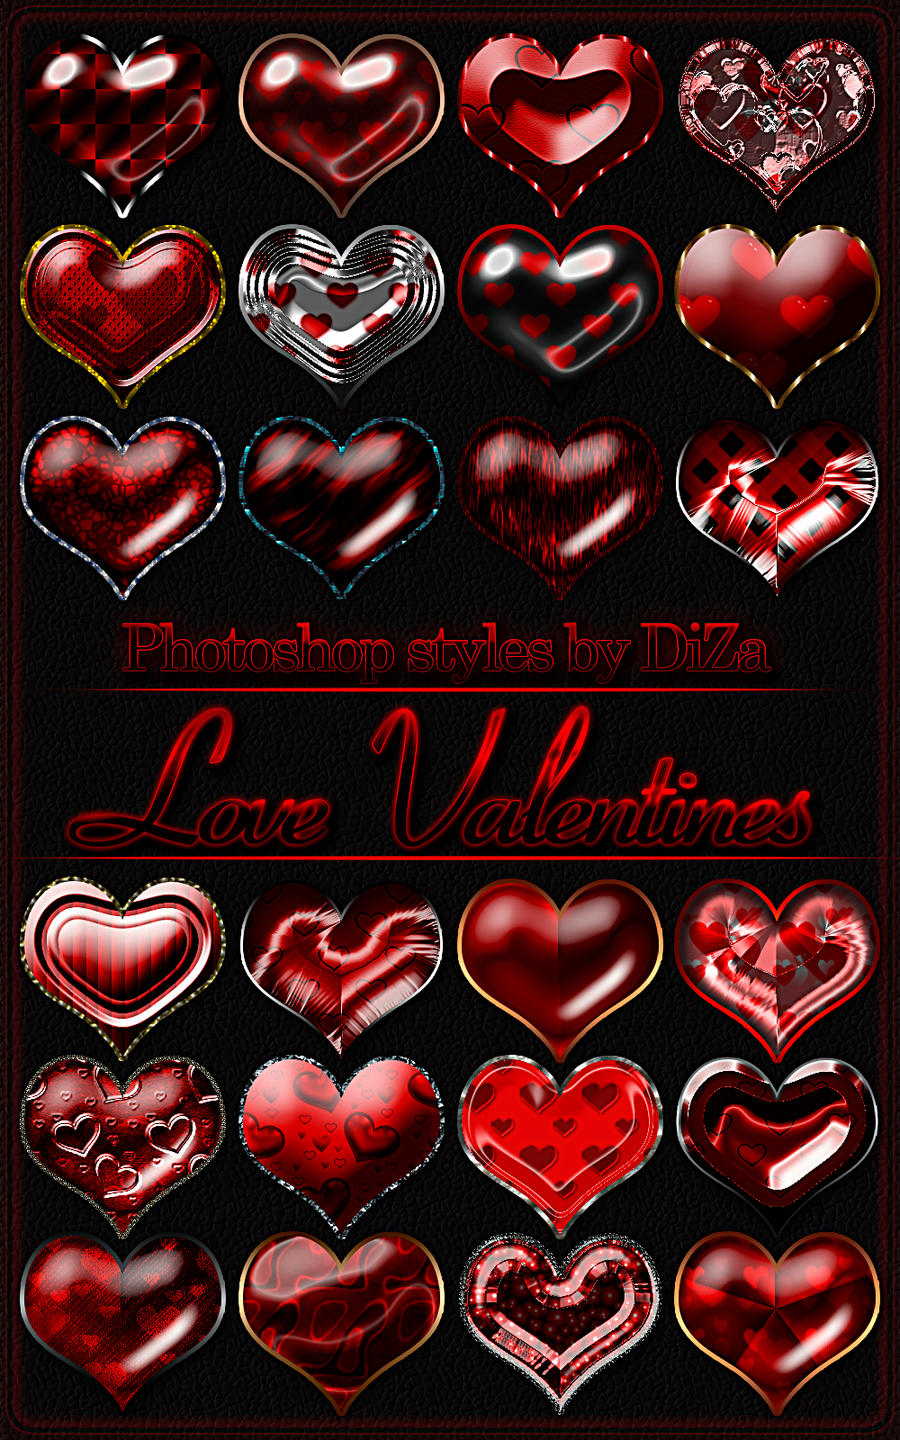 Photoshop styles 'Love Valentines'